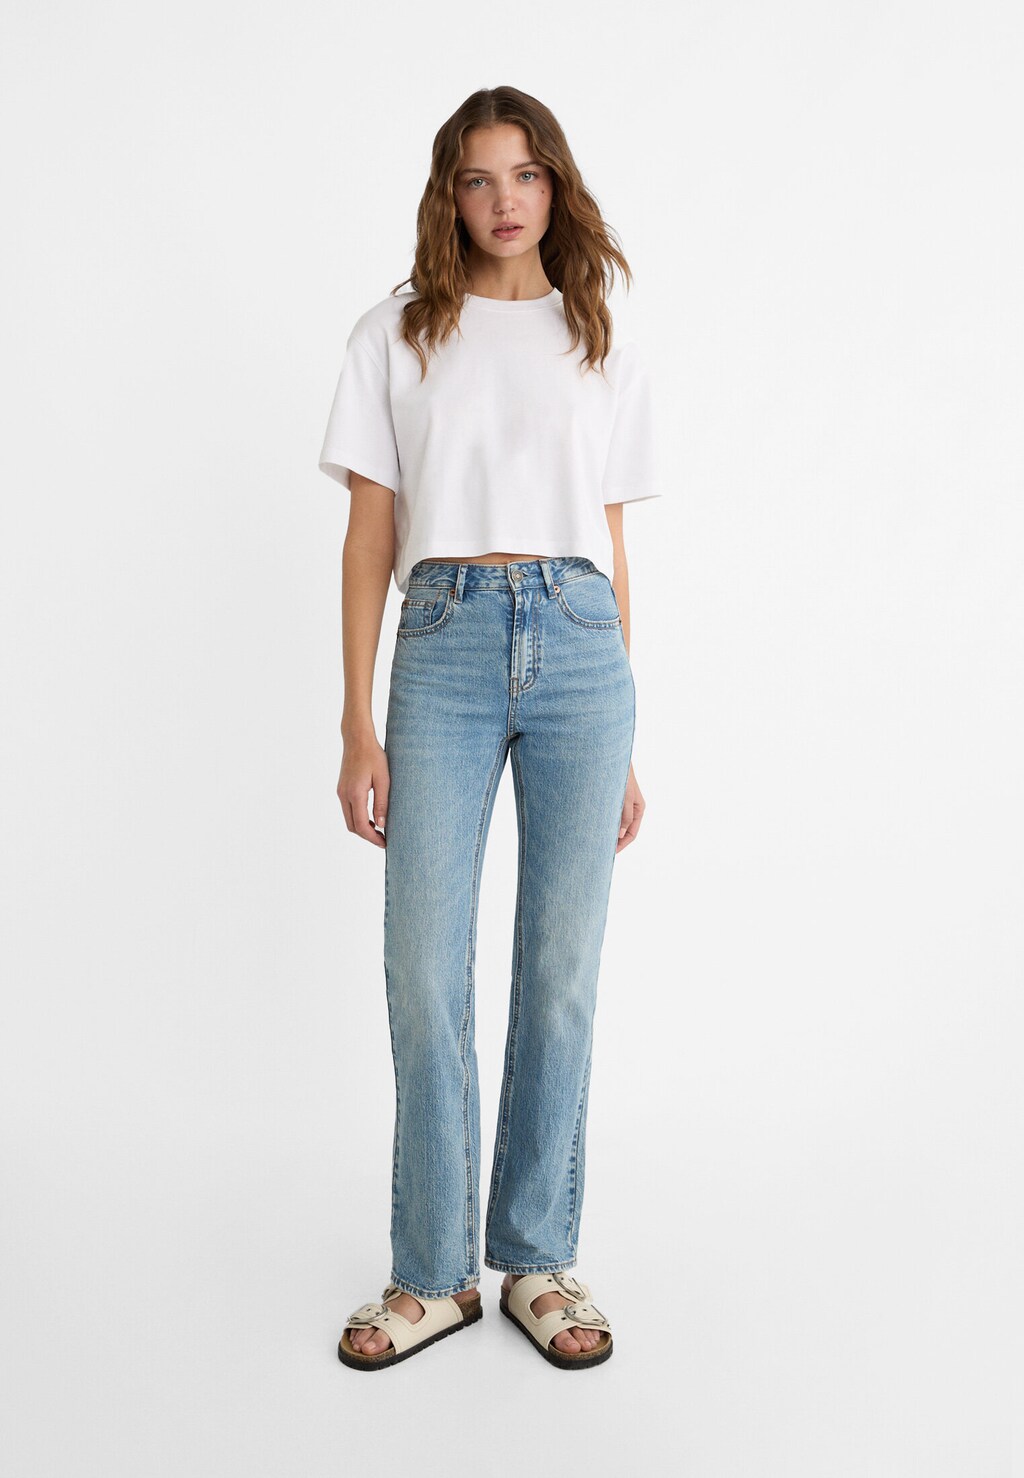 Straight-leg jeans with slit - Women's fashion